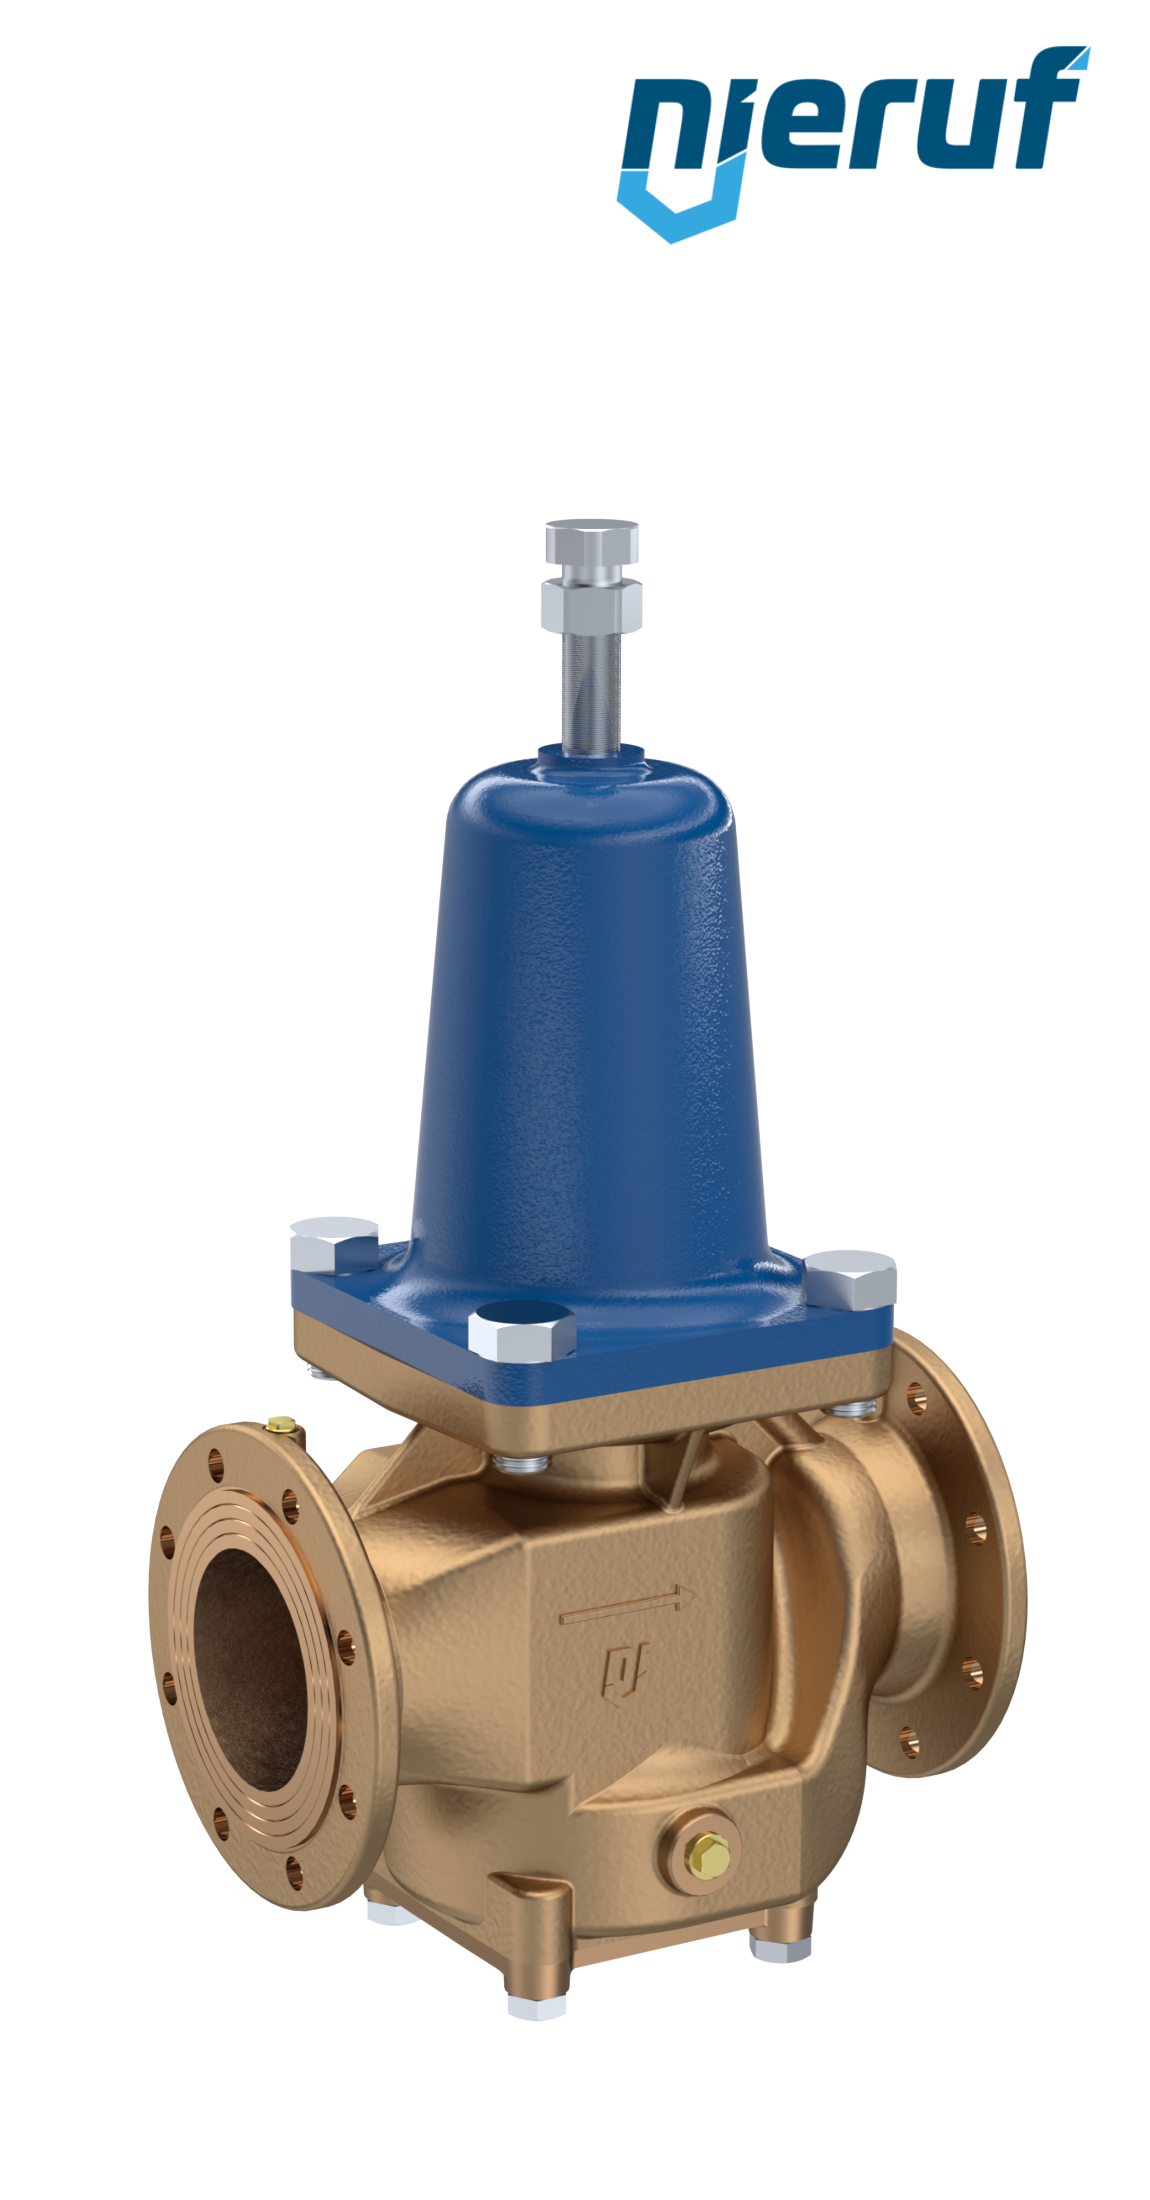 Flange-pressure reducing valve DN150 DM16 gunmetal NBR 0.5 - 4.0 bar